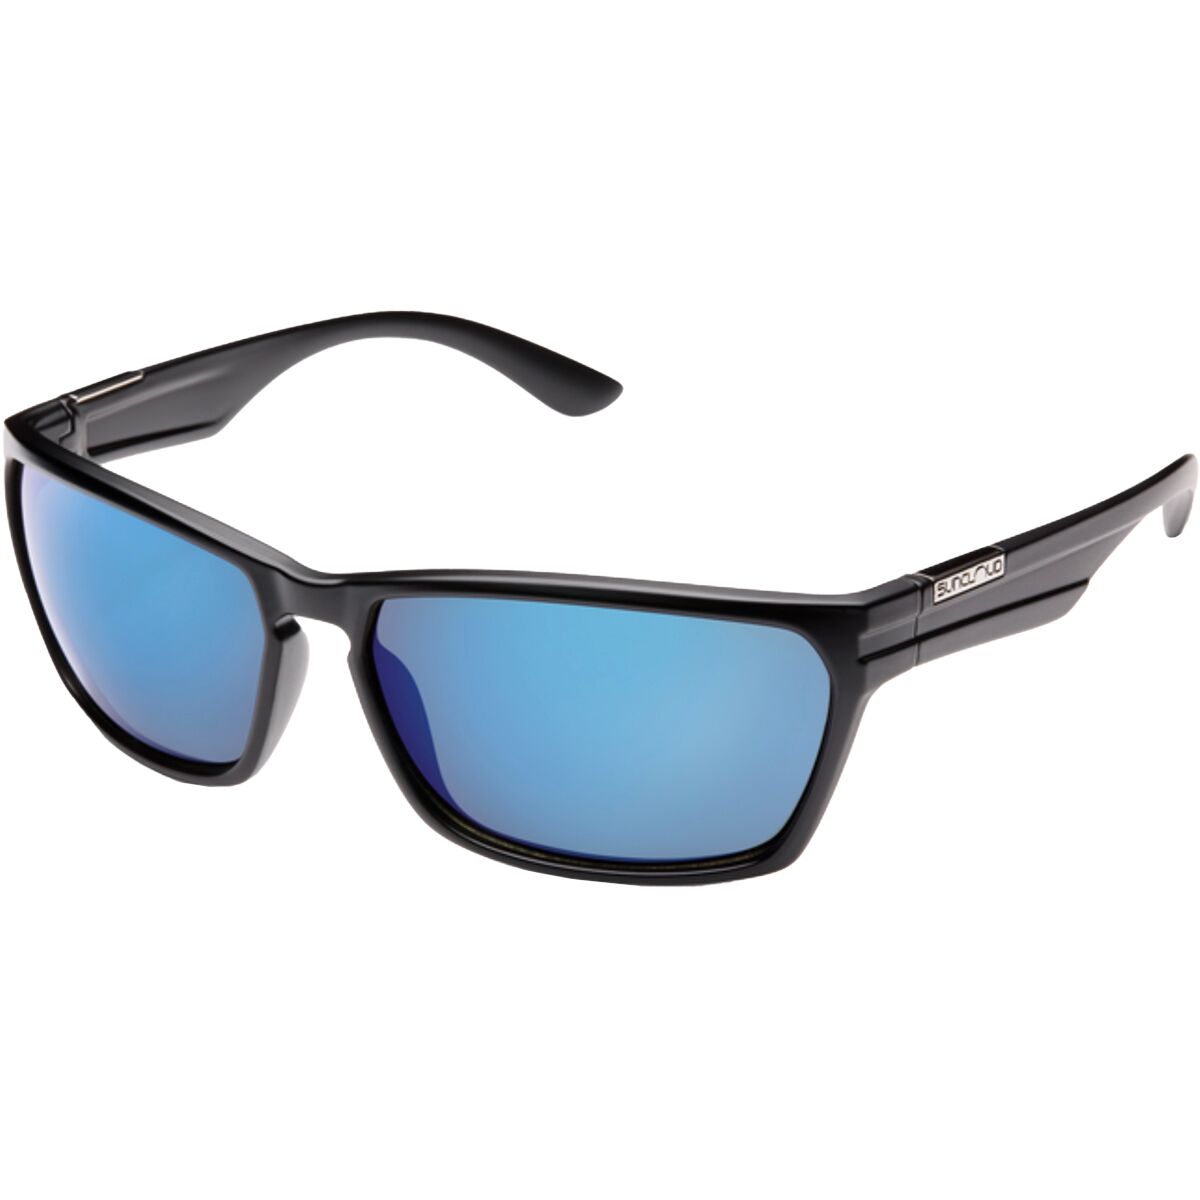 Polarized sunglasses. Polarized очки. Солнцезащитные очки Revo. Очки mo Geek. Очки mo-010 Red/Blue.